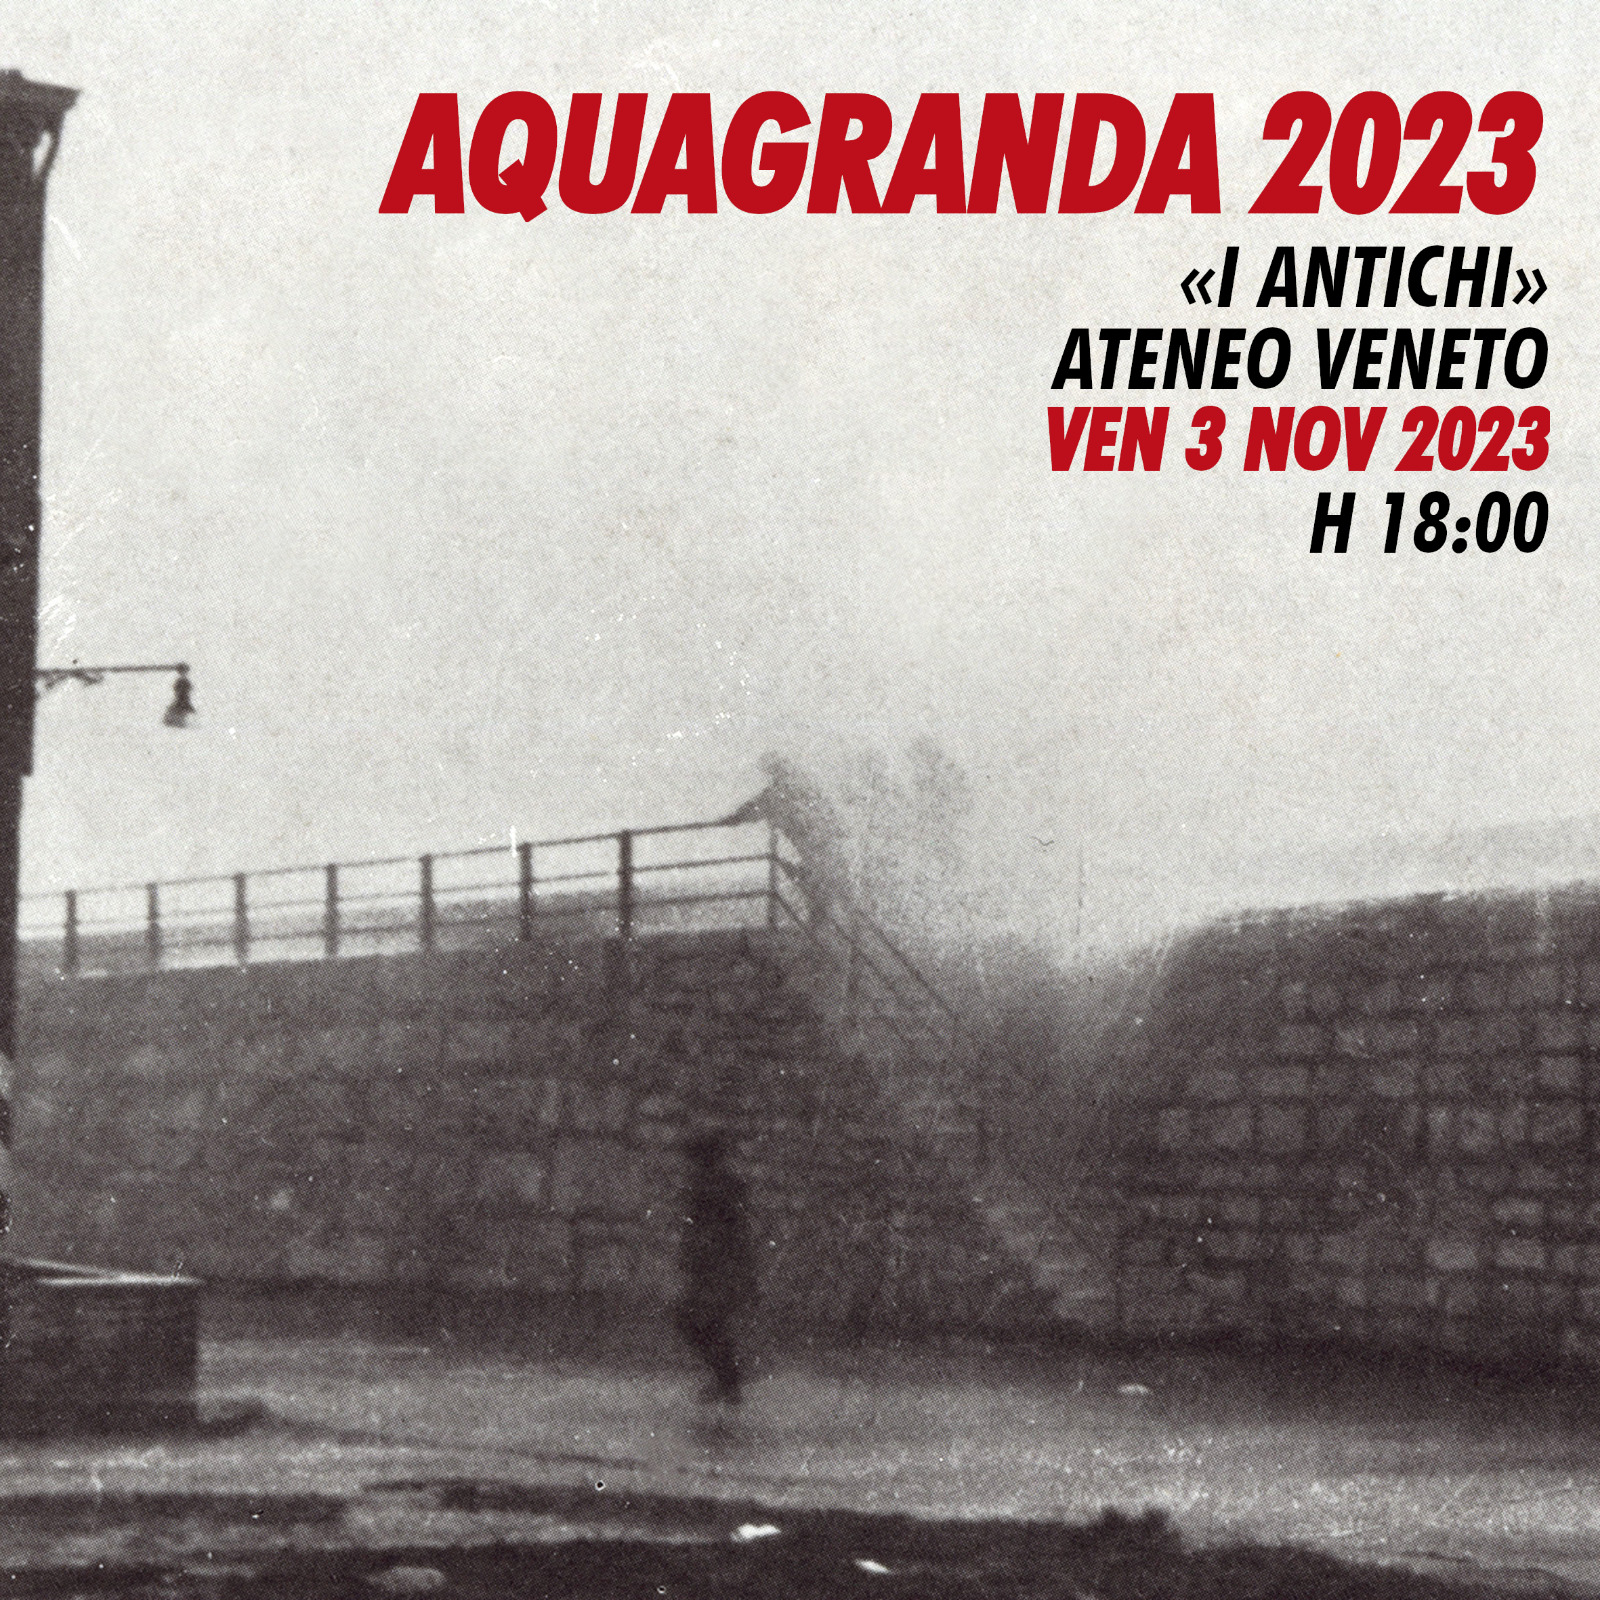 Aquagranda 2023